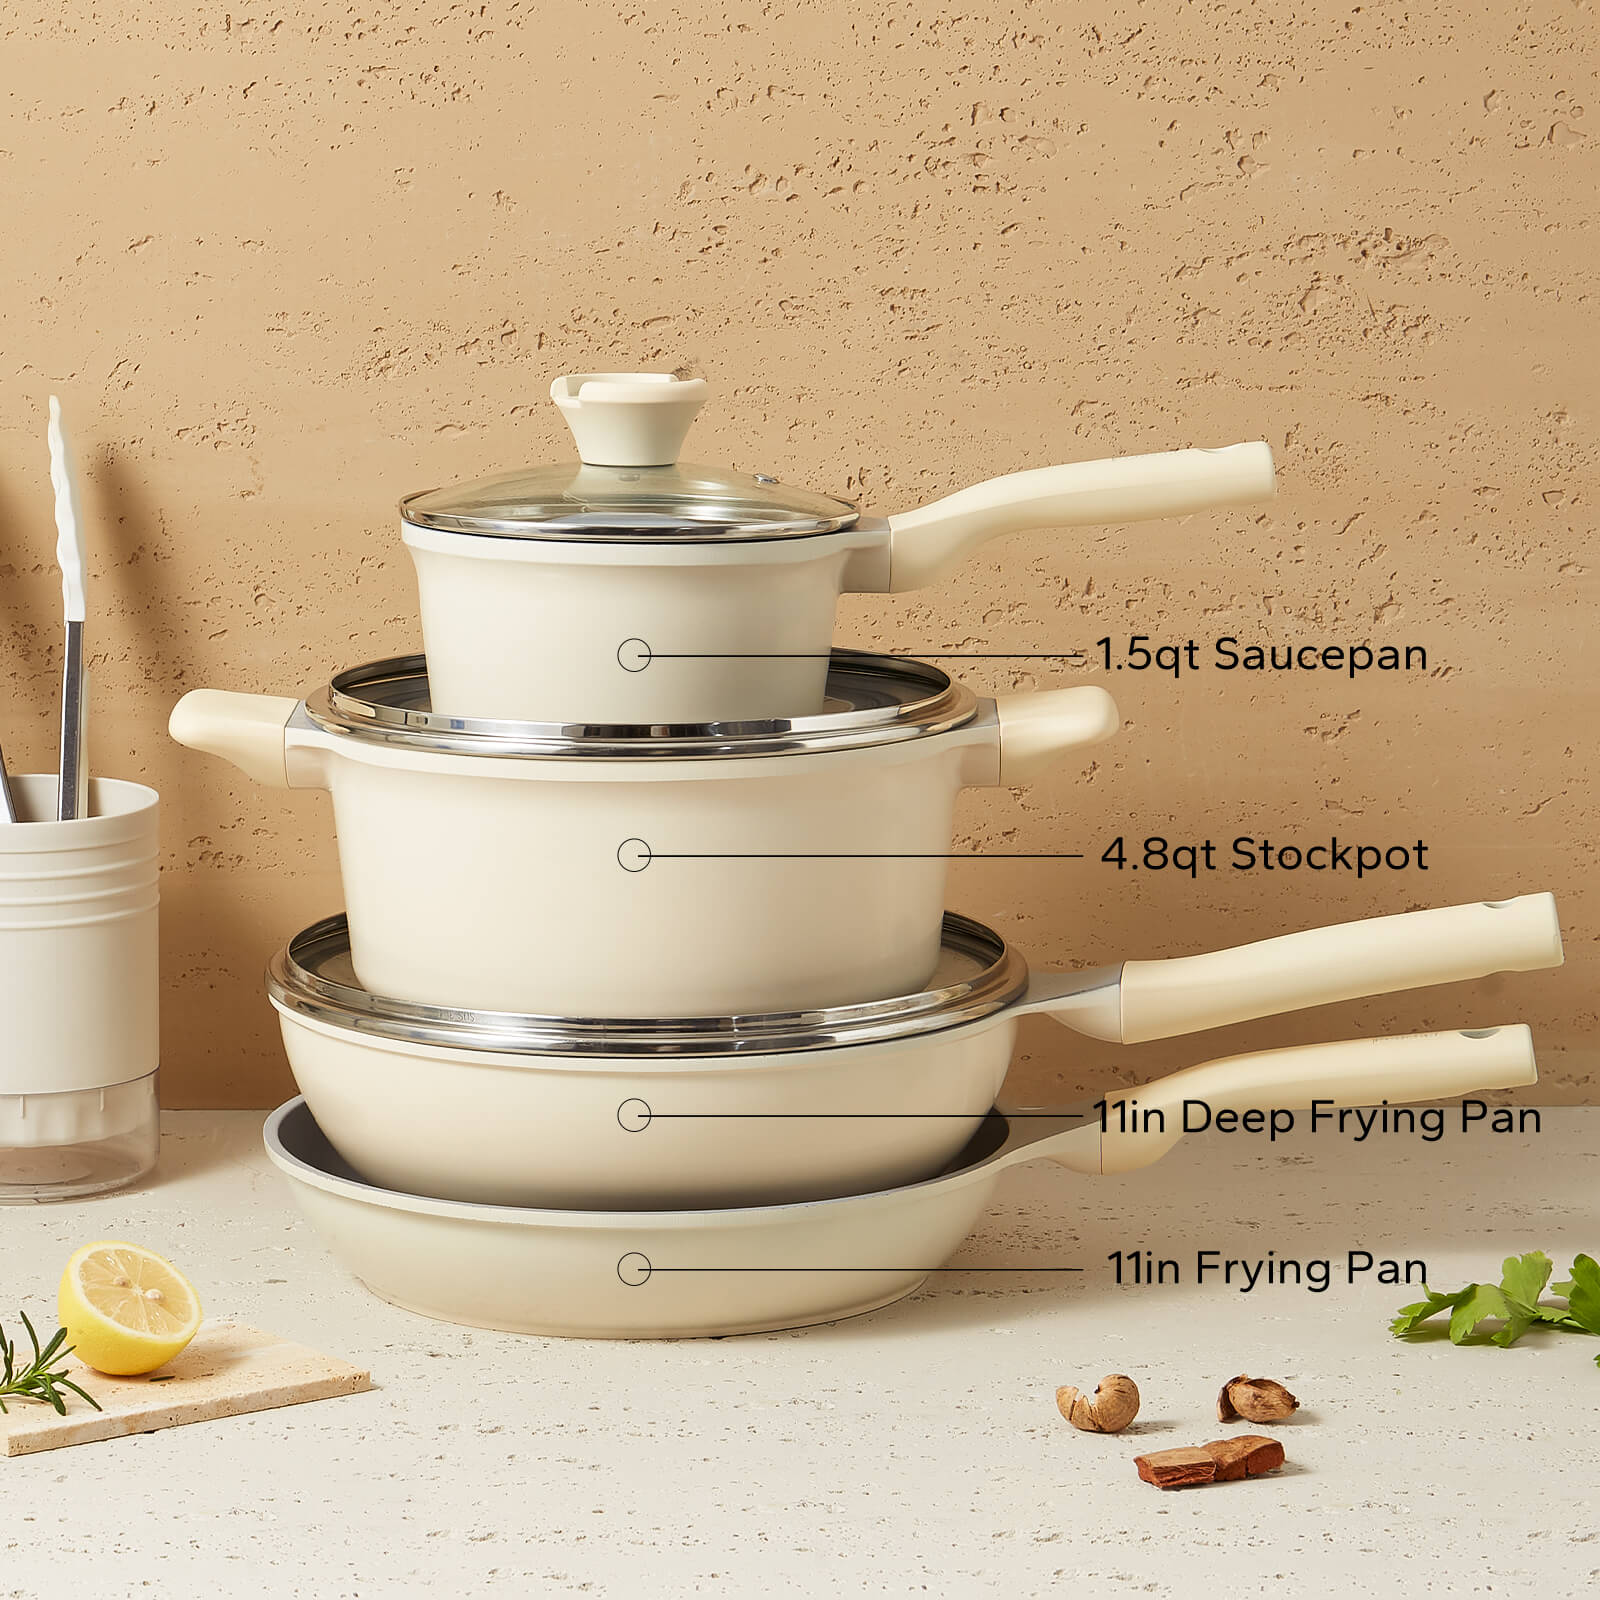 Redchef Ceramic Pots and Pans Set - 7-Piece White Nonstick Kitchen